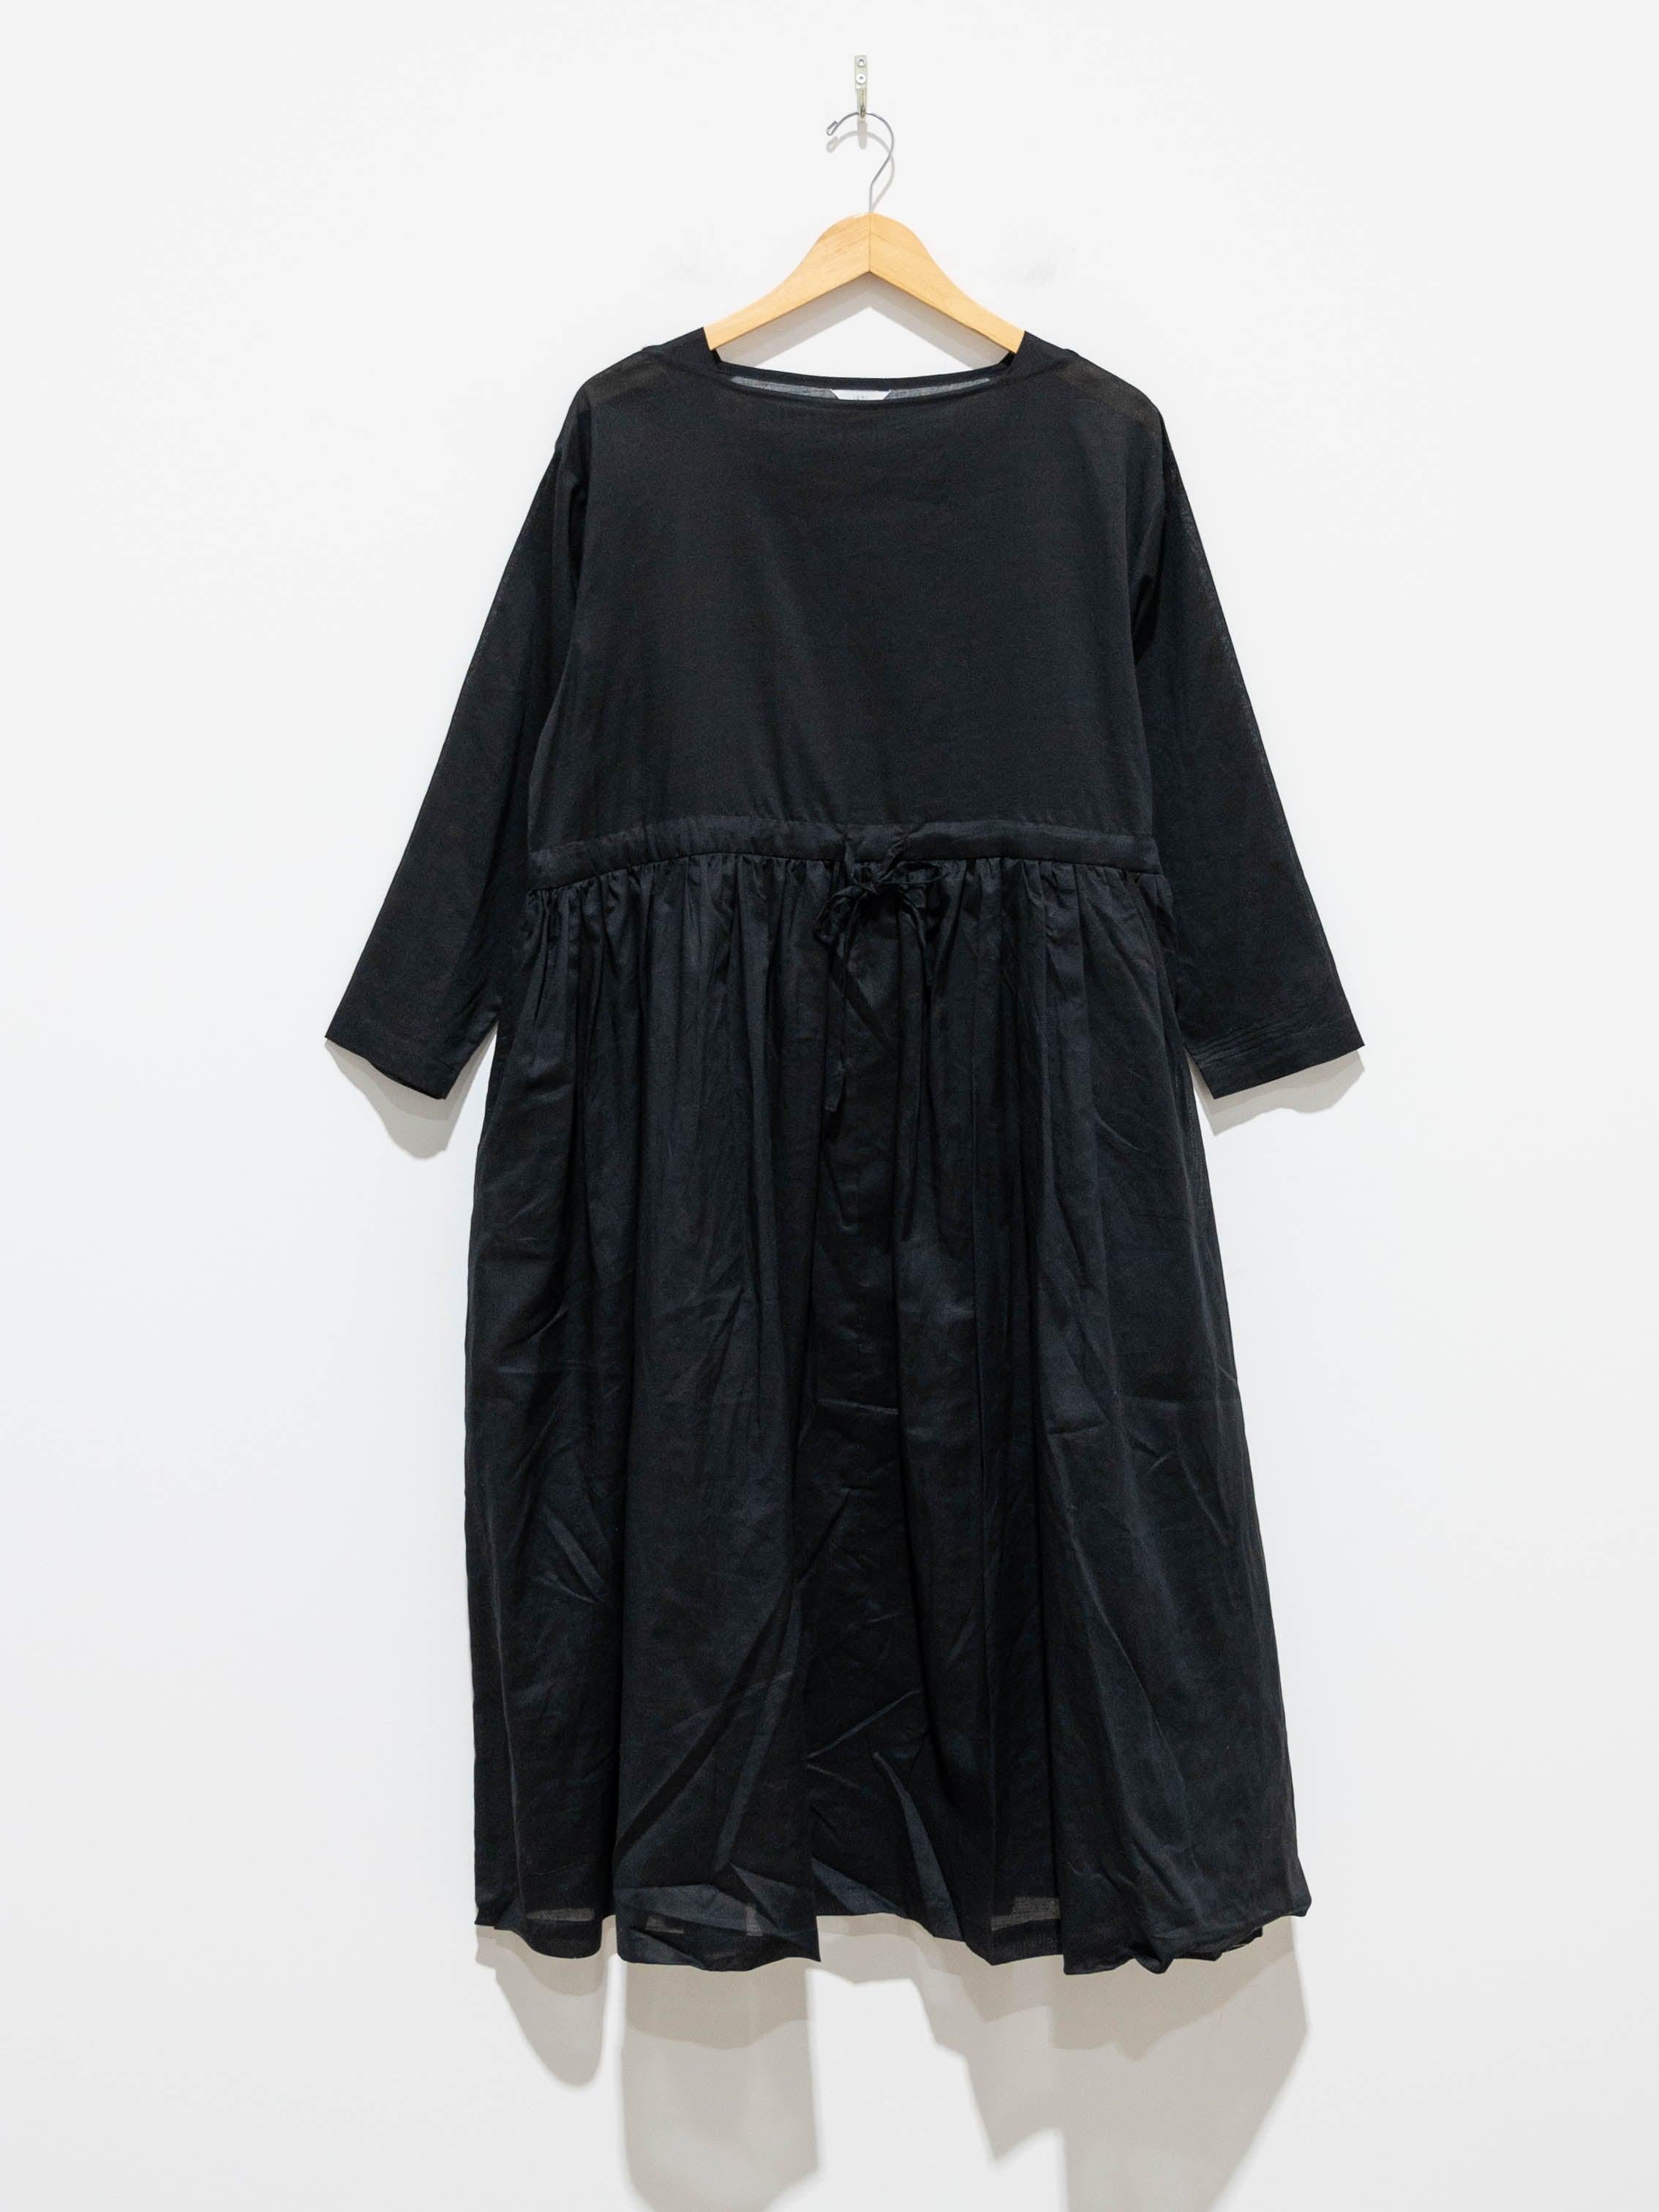 Namu Shop - Ichi Antiquites Co/Li Volume Gather Dress - Black